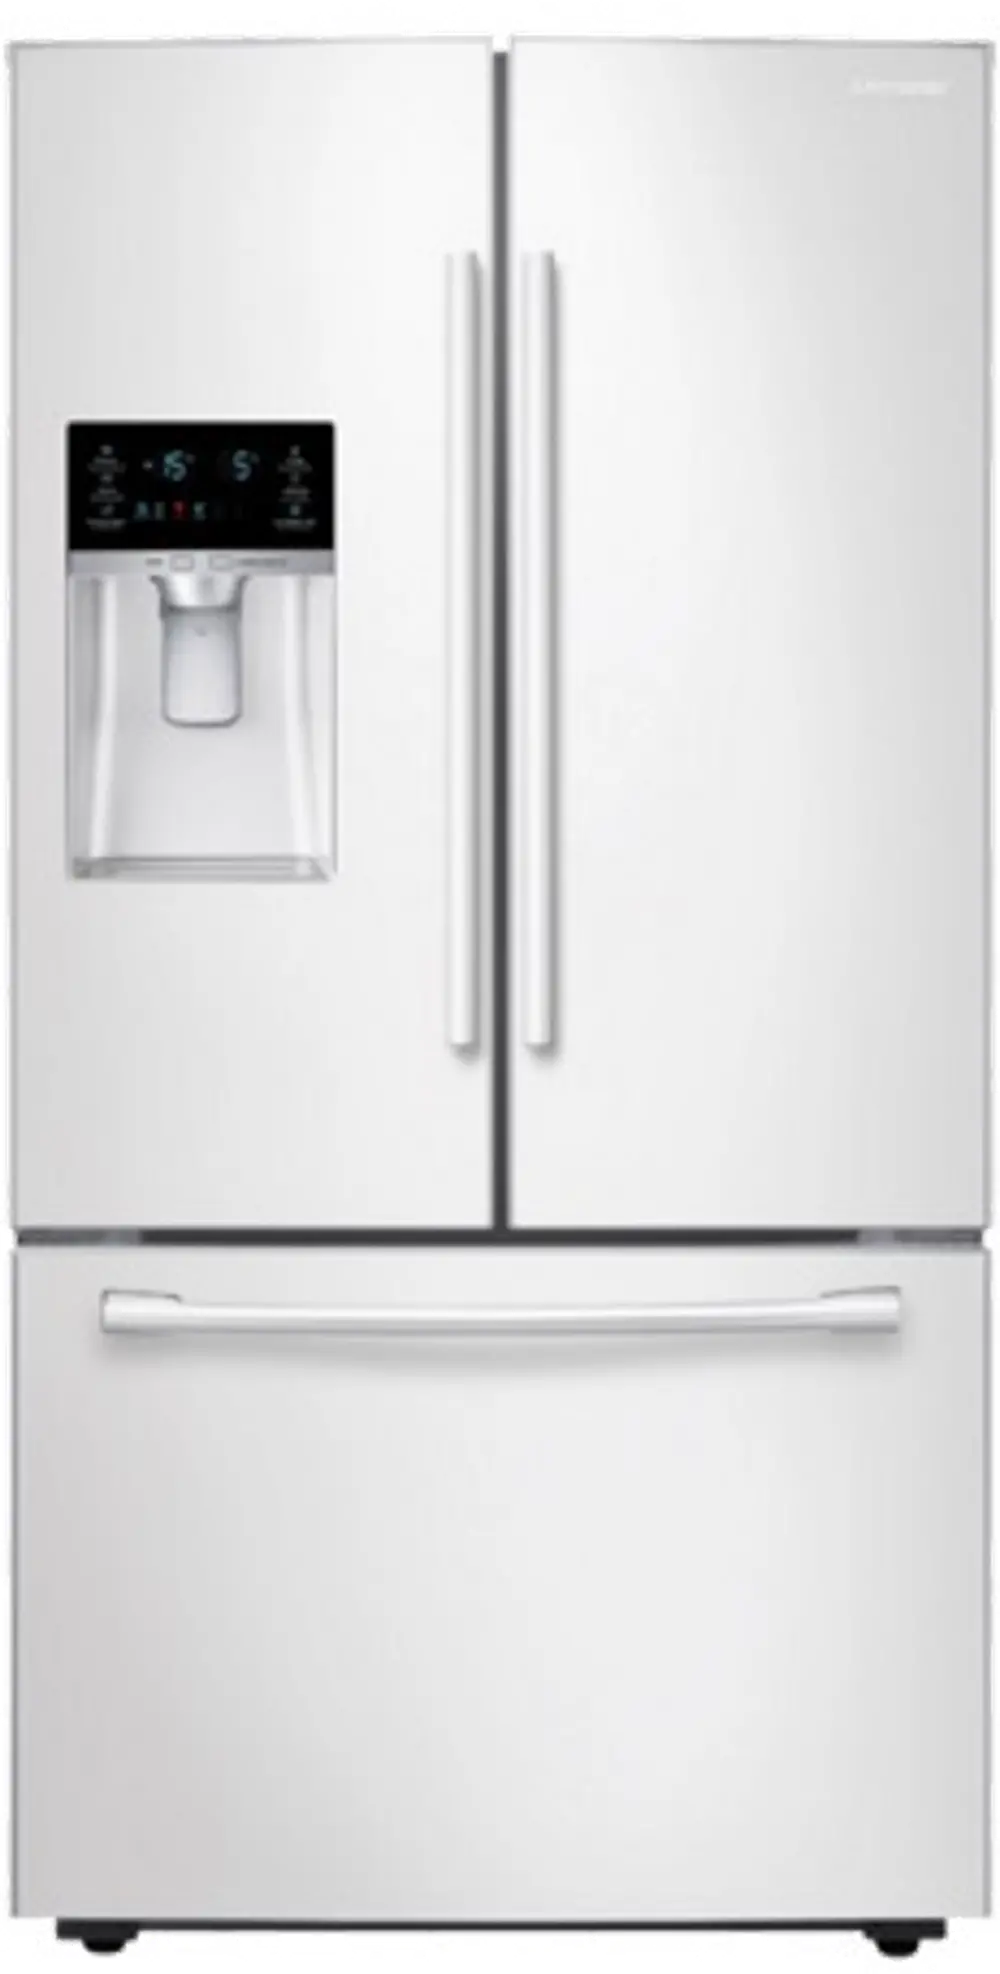 RF23HCEDBWW Samsung Counter Depth French Door Smart Refrigerator - 22.5 cu. ft., 36 Inch White-1